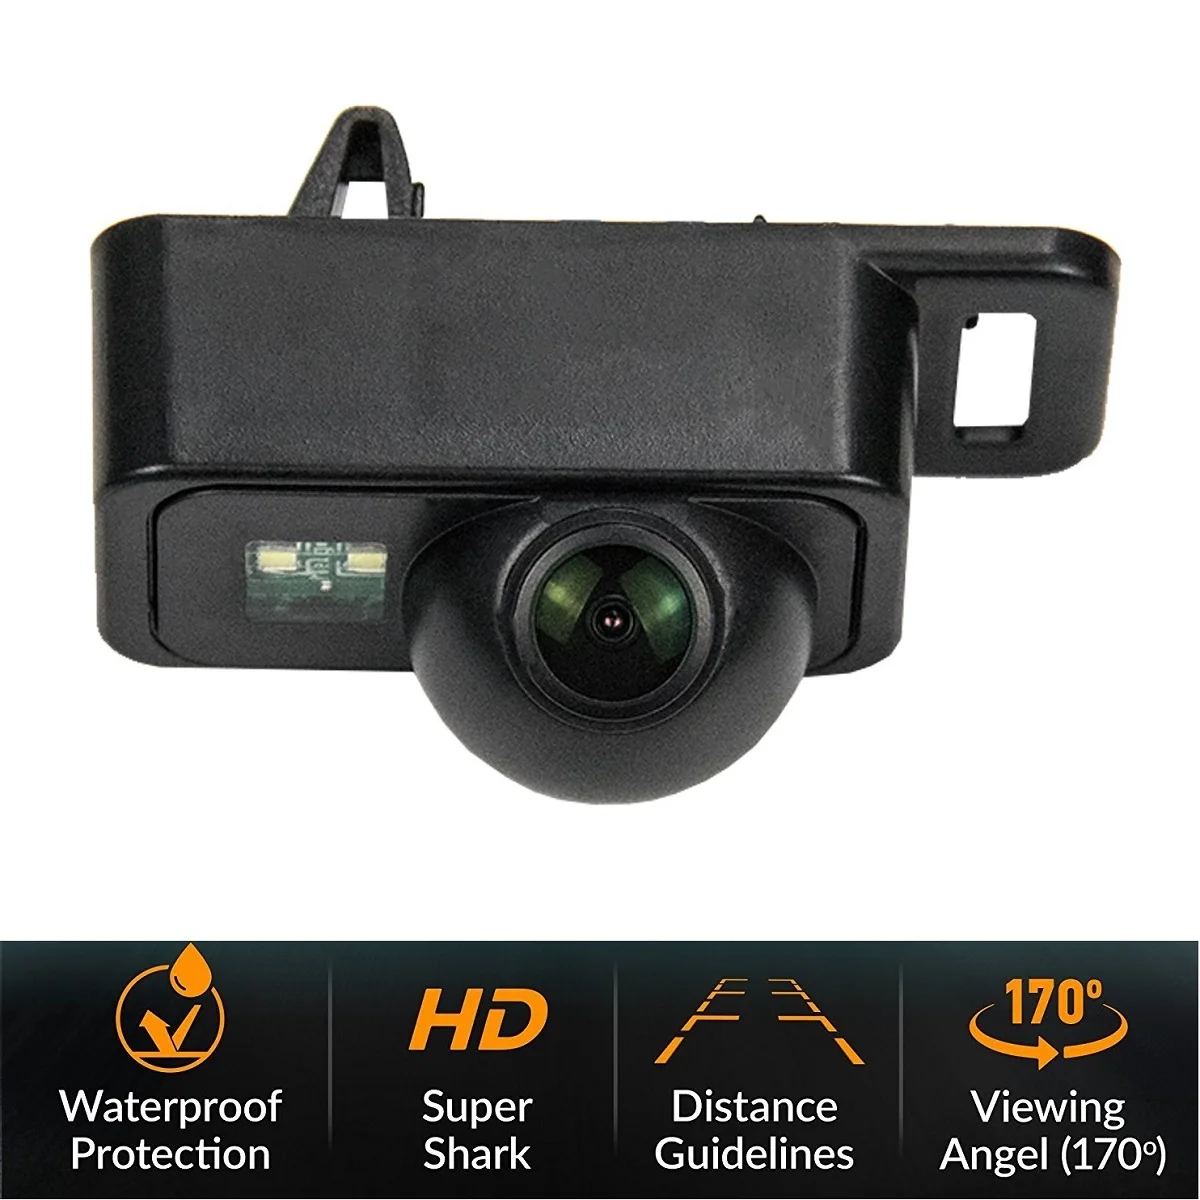 

Misayaee HD 1280*720p Plate Light License Rear View Camera for TOYOTA REIZ/LAND CRUISER,Reversing Backup Waterproof Camera